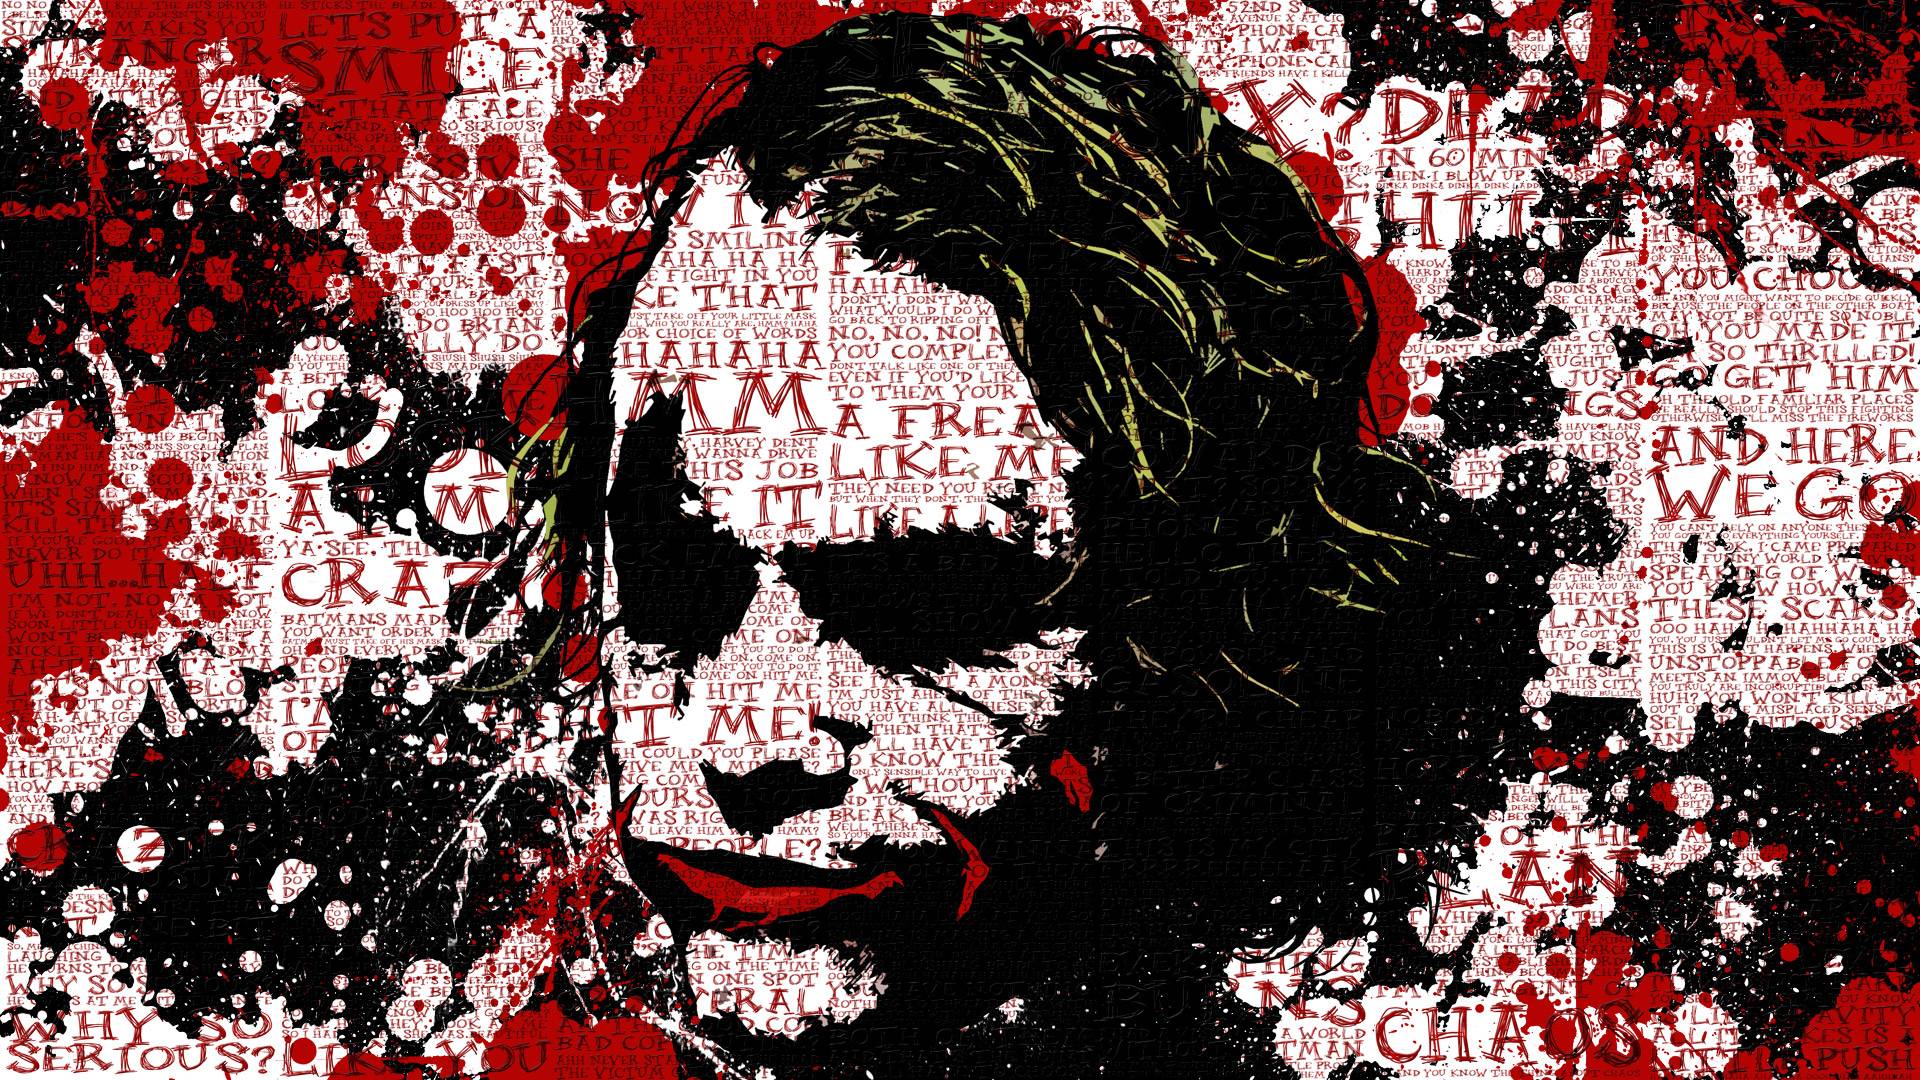 Heath Ledger Joker Wallpapers - Wallpaper Cave